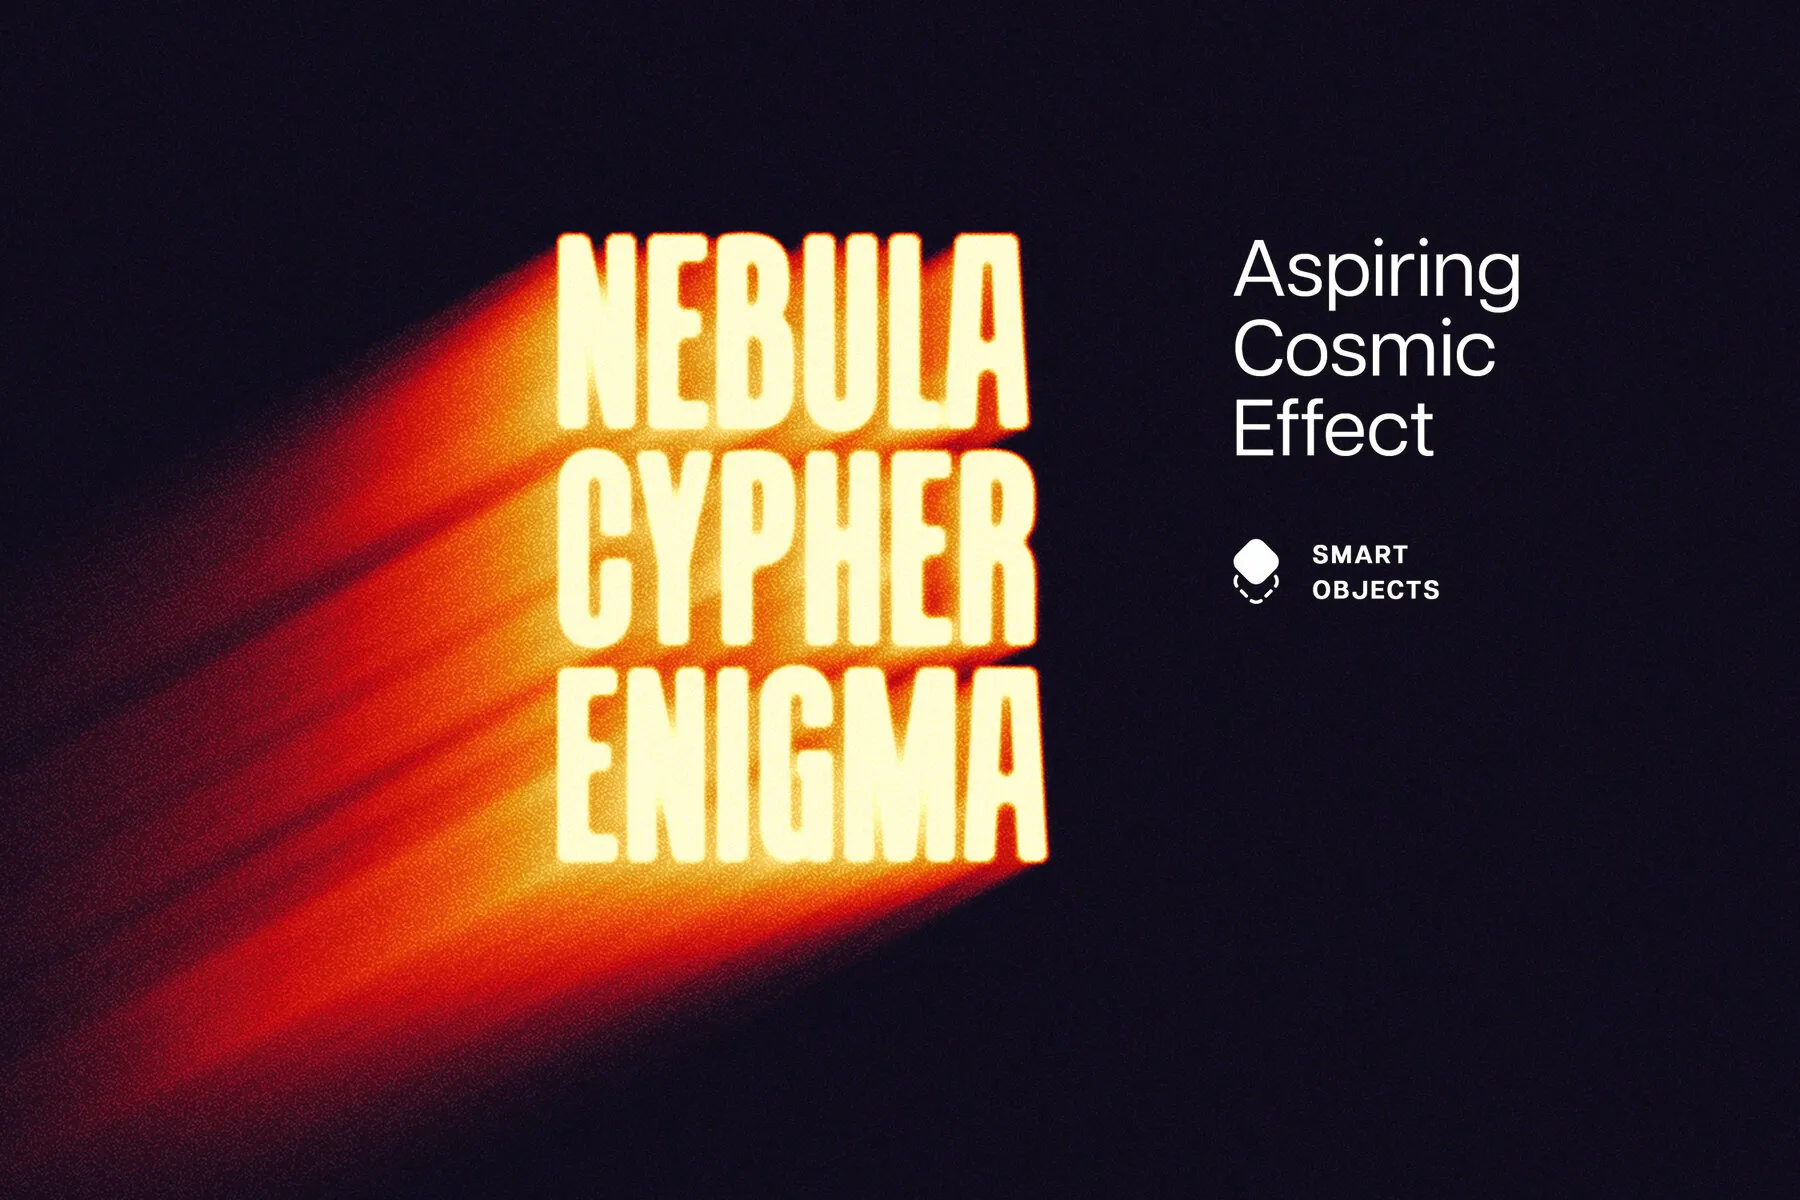 Aspiring Motion Blur Text & Graphic Effect